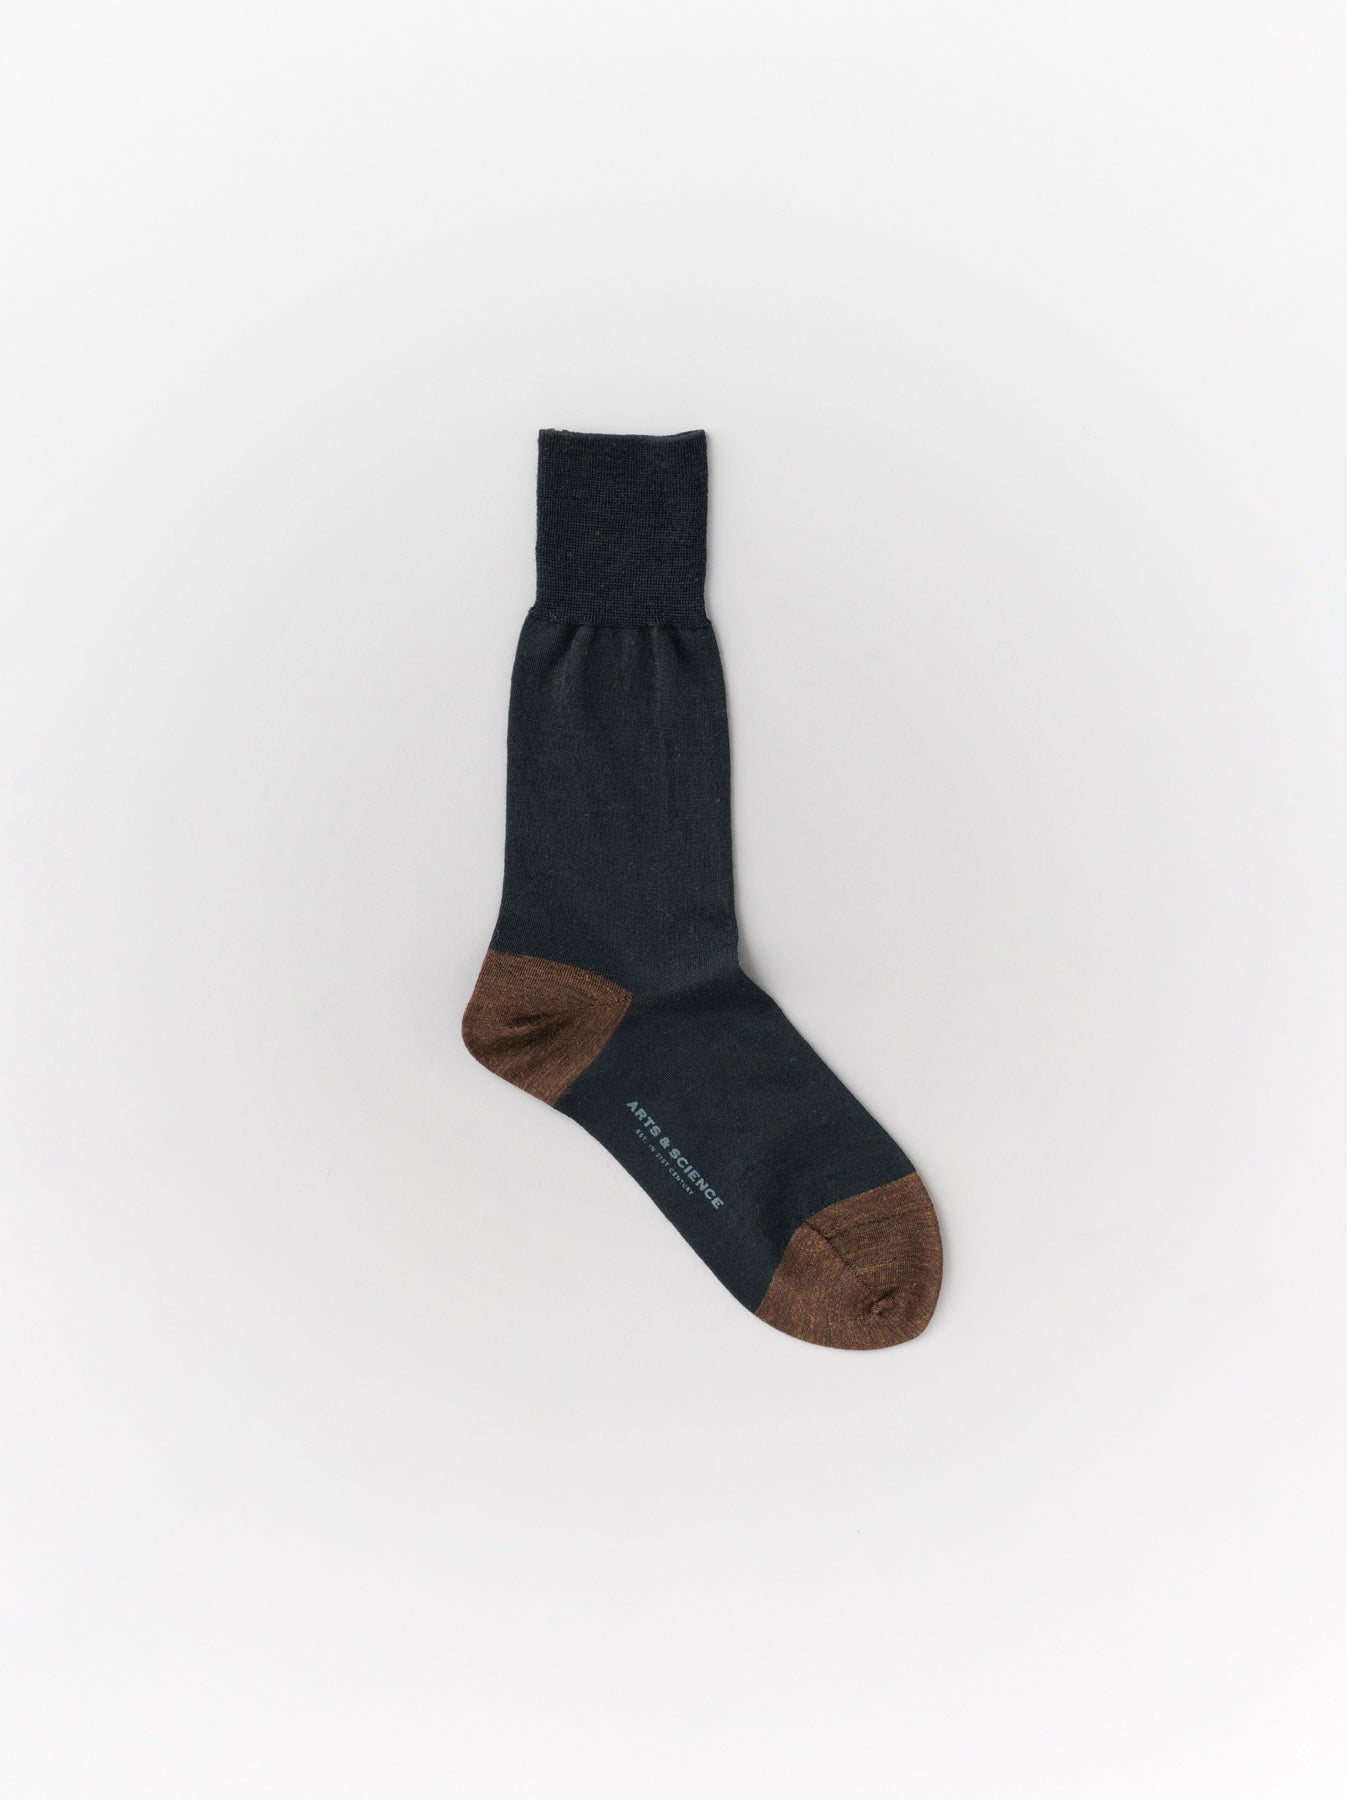 Combi color socks – ARTS&SCIENCE ONLINE SELLER intl.